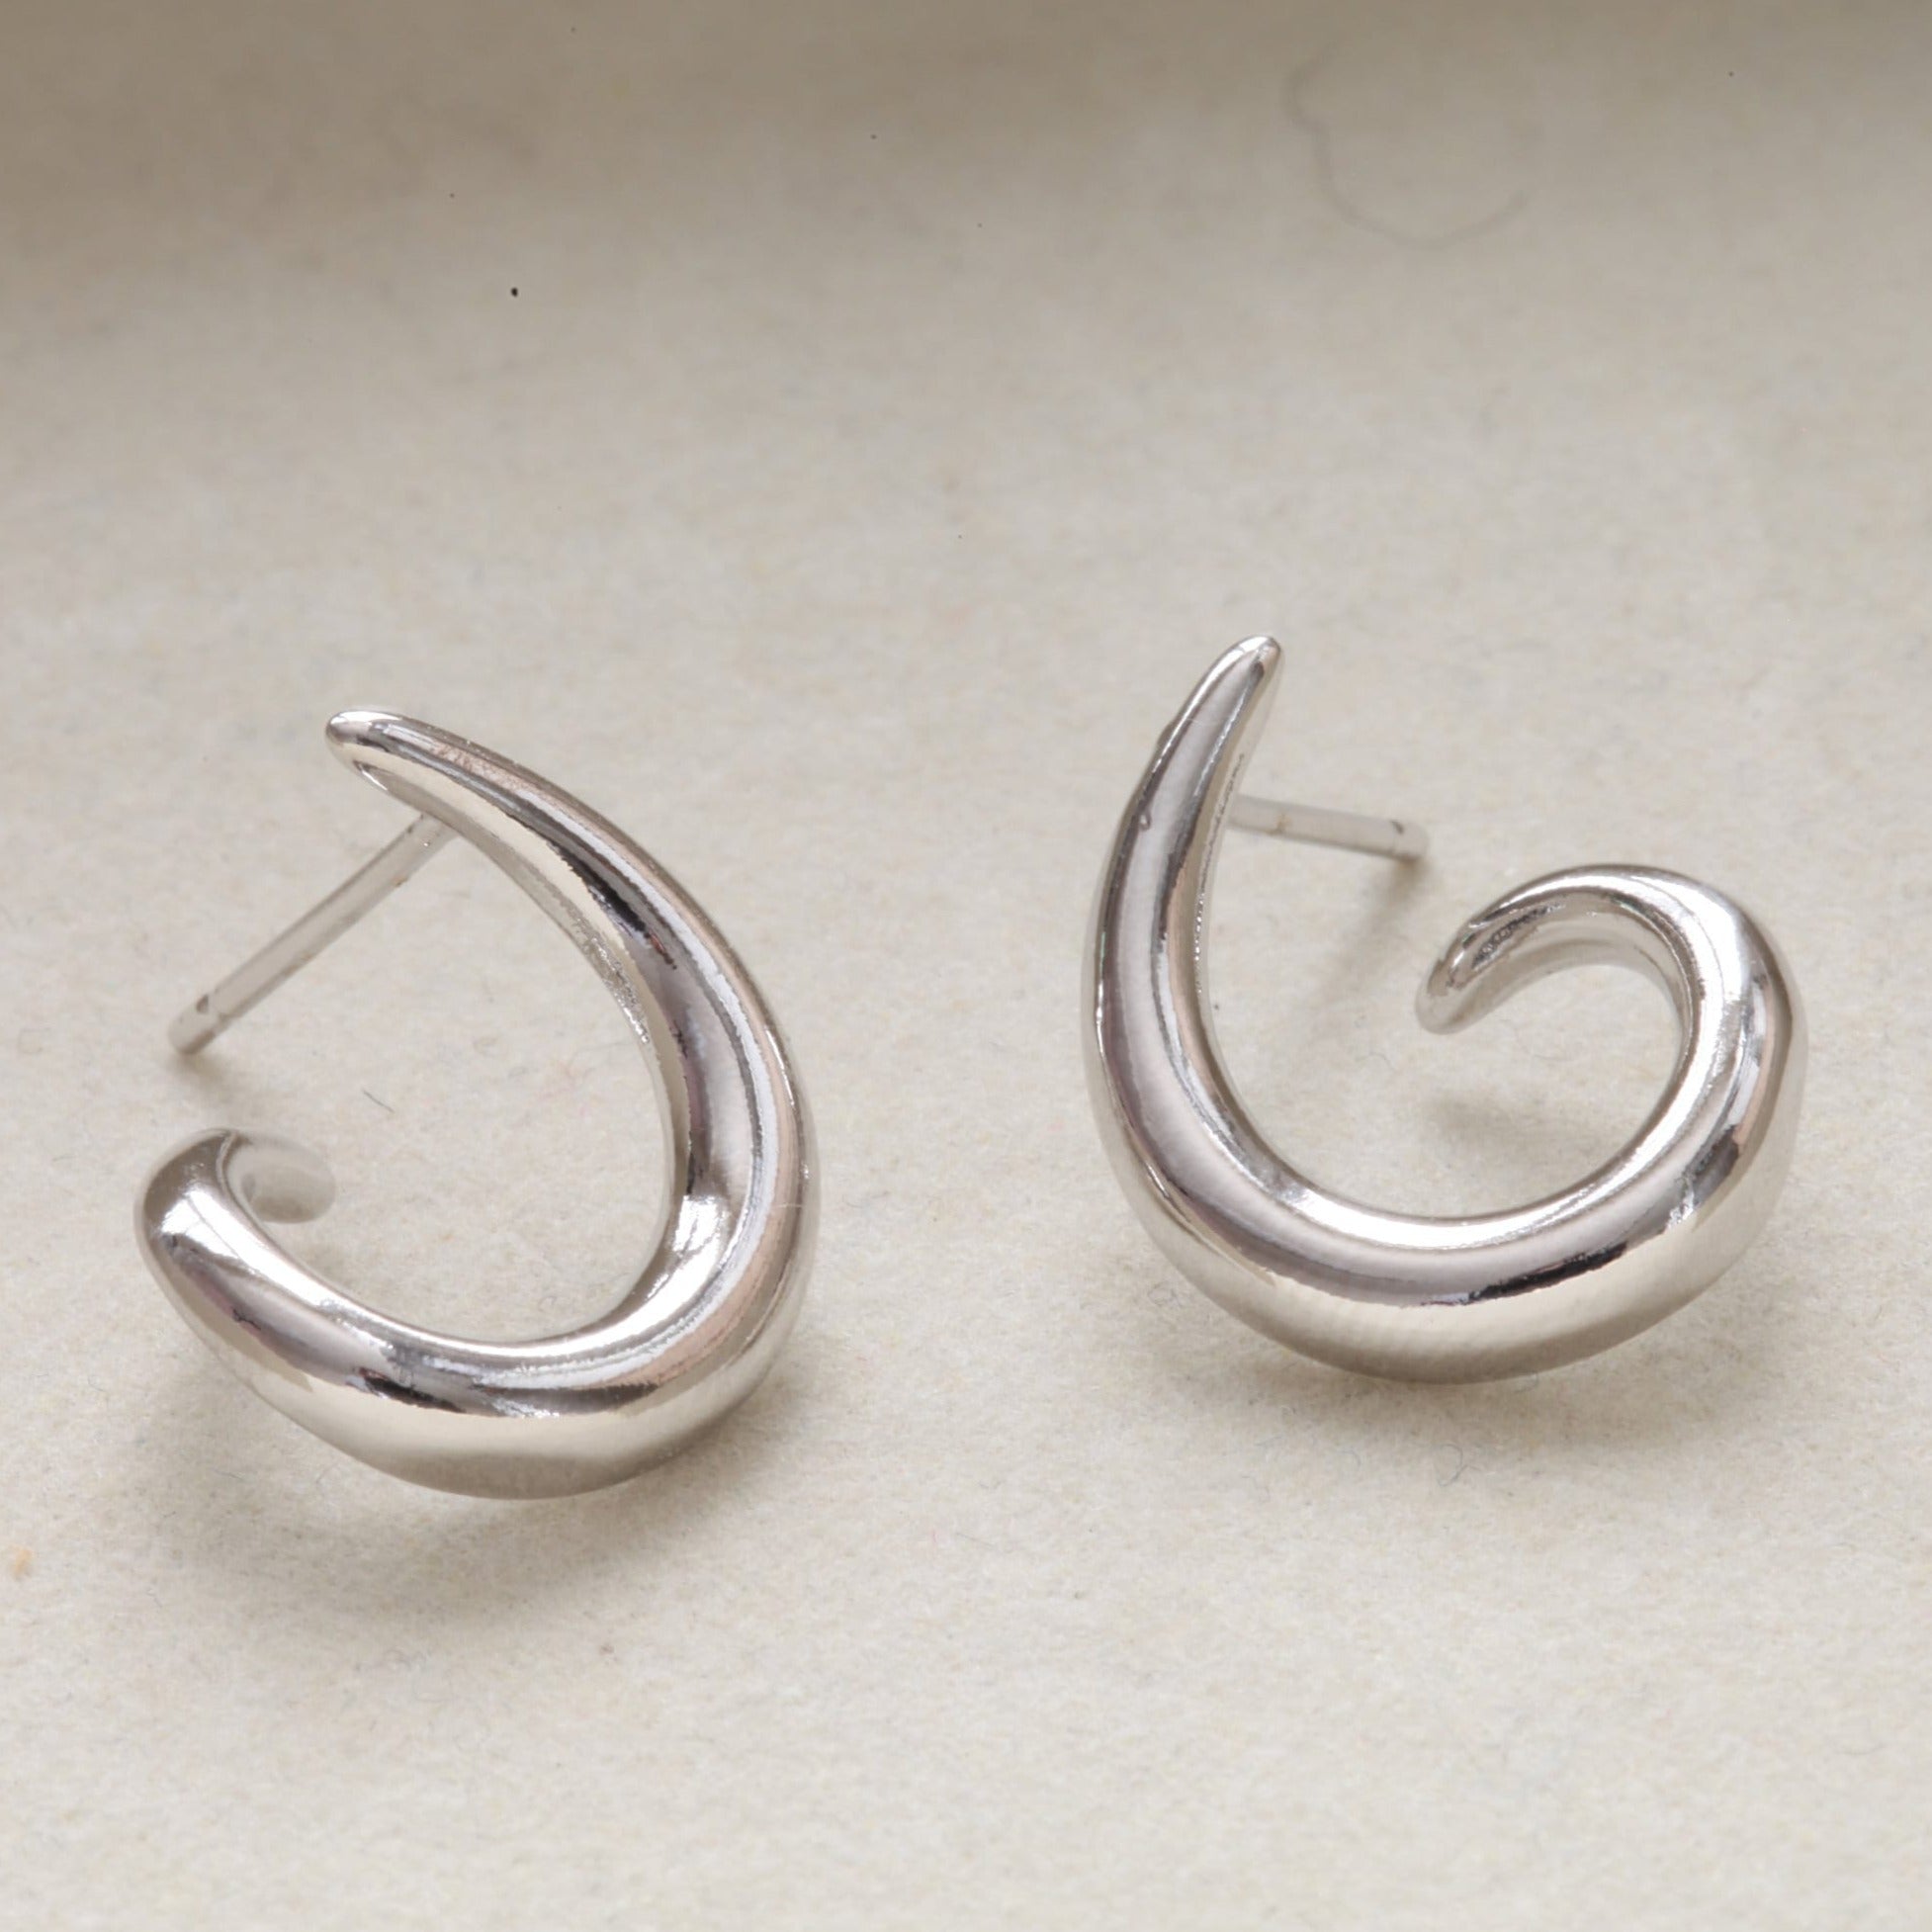 Silver Spiral Stud Earring 16g Silver Spiral Earring Delicate Circle Swirl Stud Geometric Earring Screw Back Earring M Size Large Size M Size 